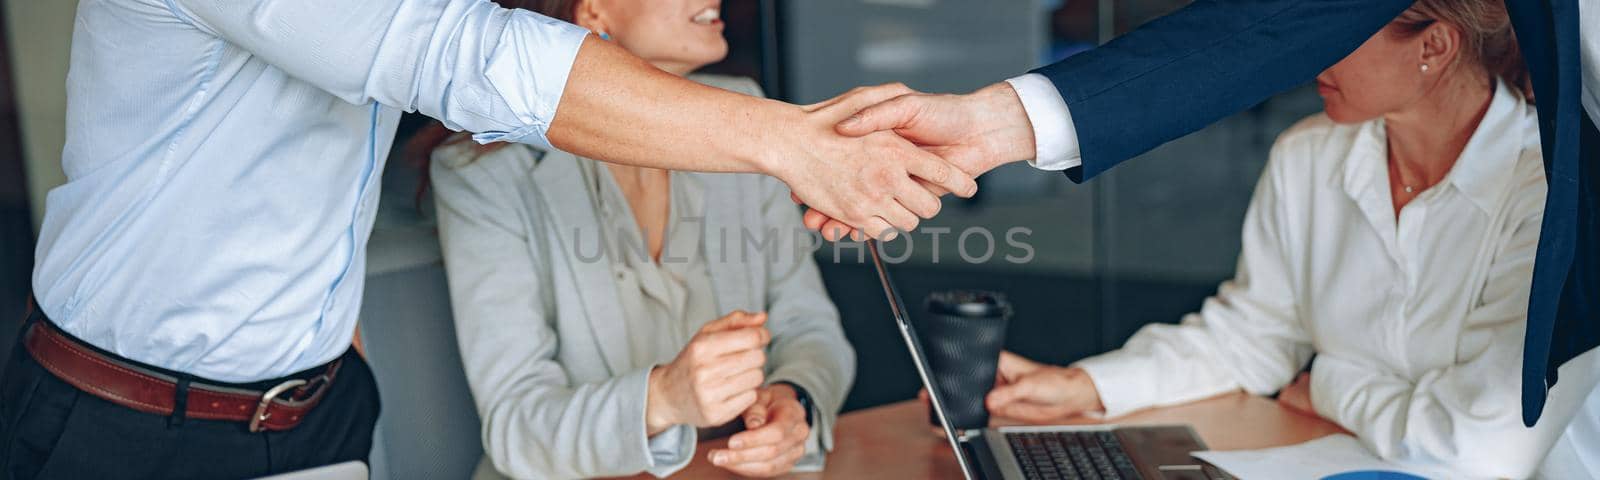 Business male partnership handshake. Photo handshaking process. Successful deal after meeting by Yaroslav_astakhov